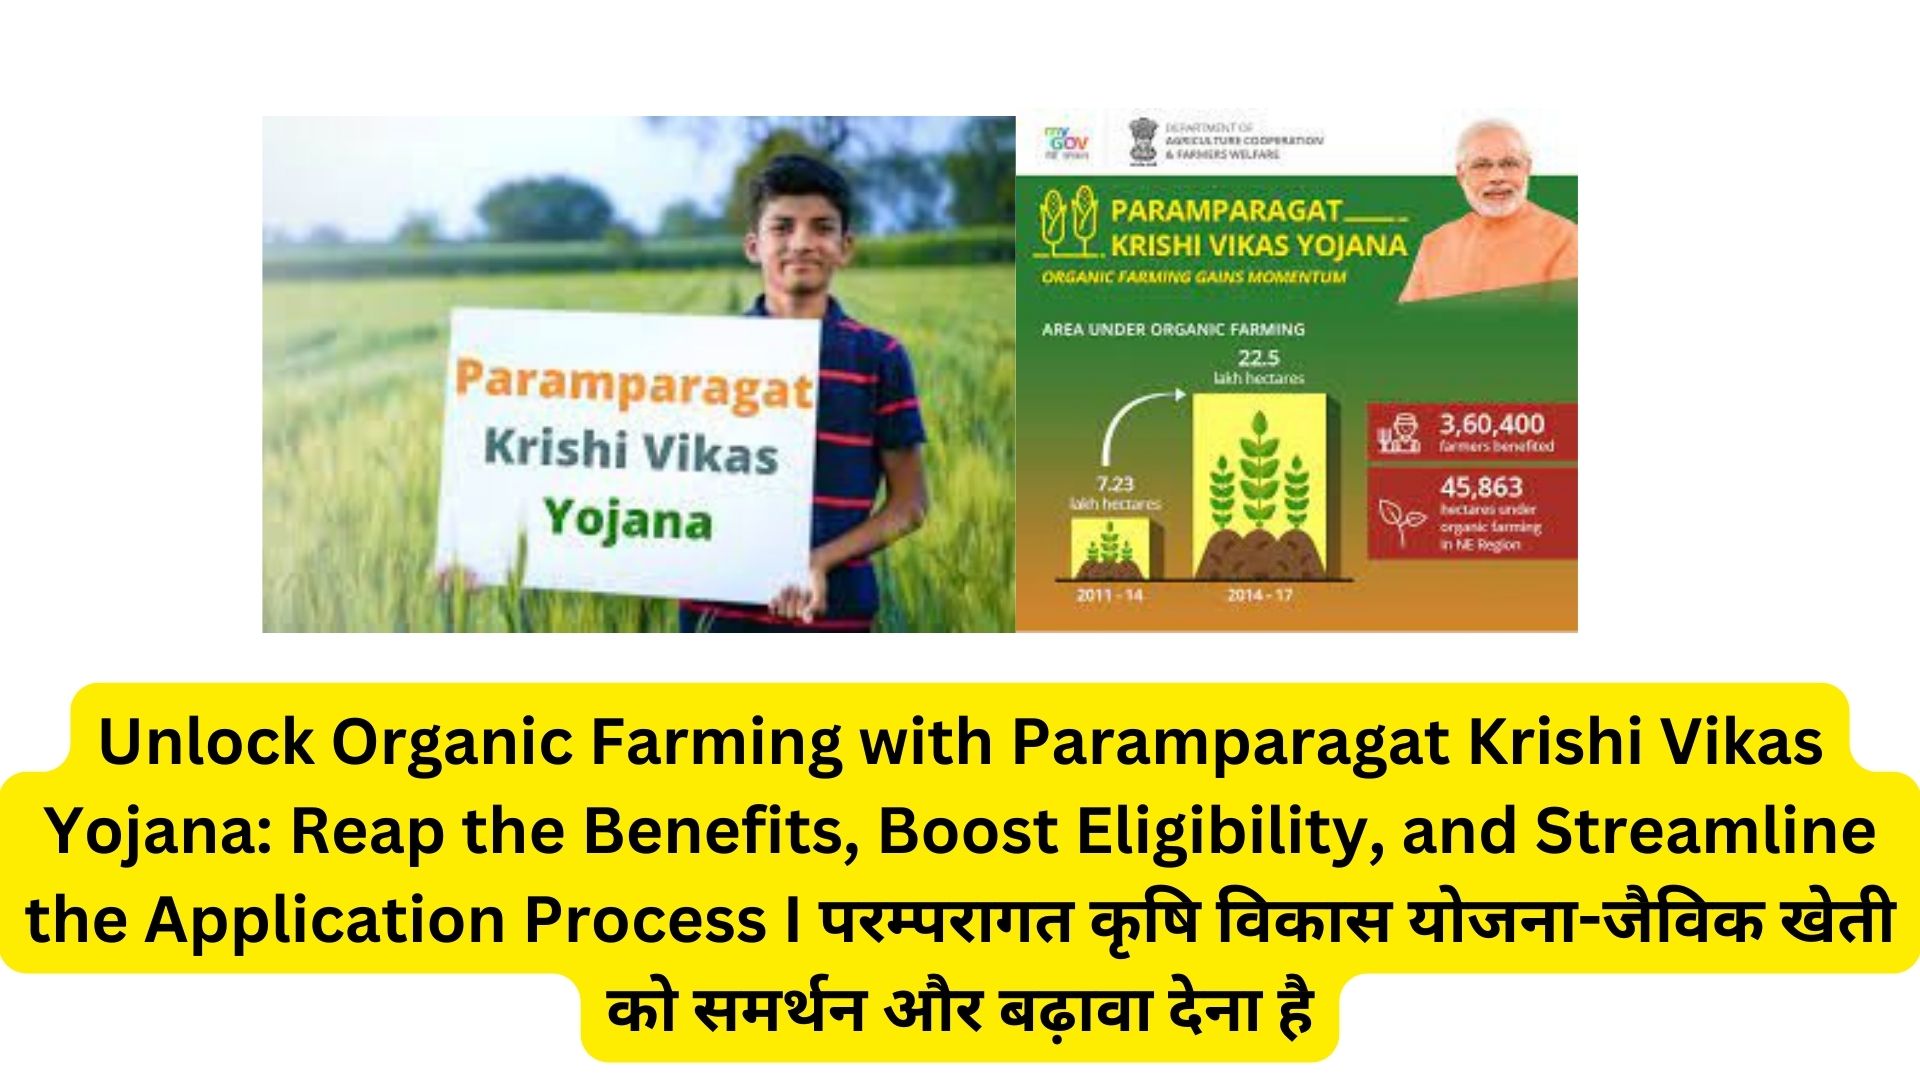 Unlock Organic Farming with Paramparagat Krishi Vikas Yojana: Reap the Benefits, Boost Eligibility, and Streamline the Application Process I परम्परागत कृषि विकास योजना-जैविक खेती को समर्थन और बढ़ावा देना है